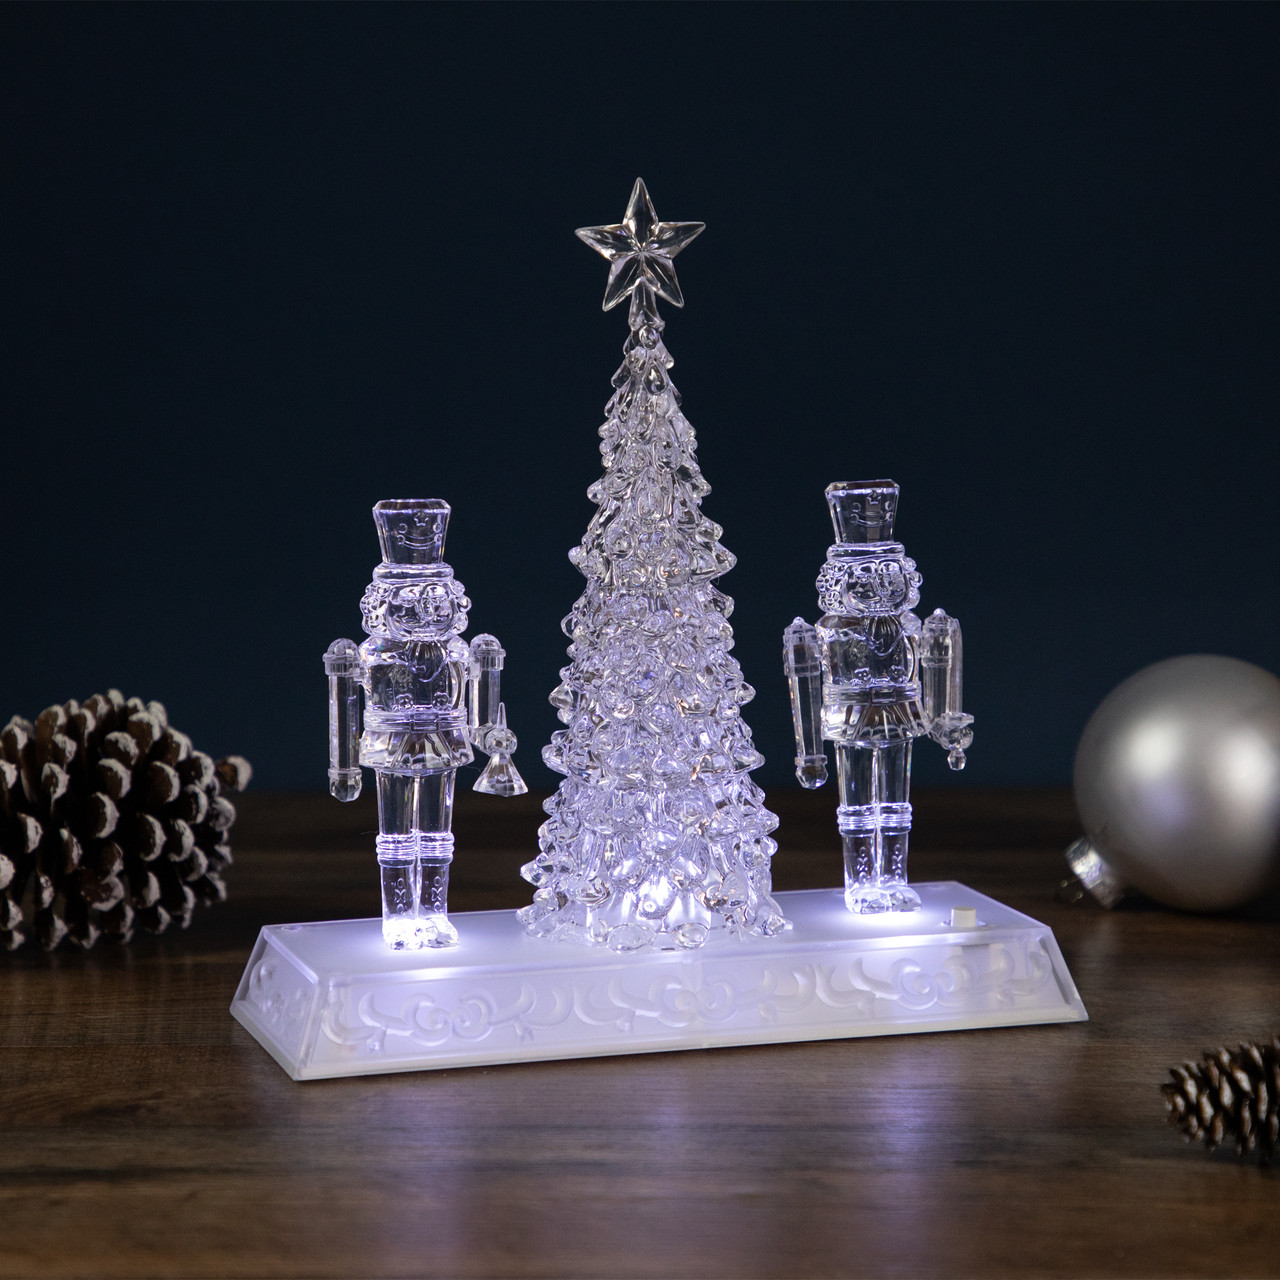 Northlight 9 LED Lighted Icy Crystal Glitter Snow Globe Christmas House